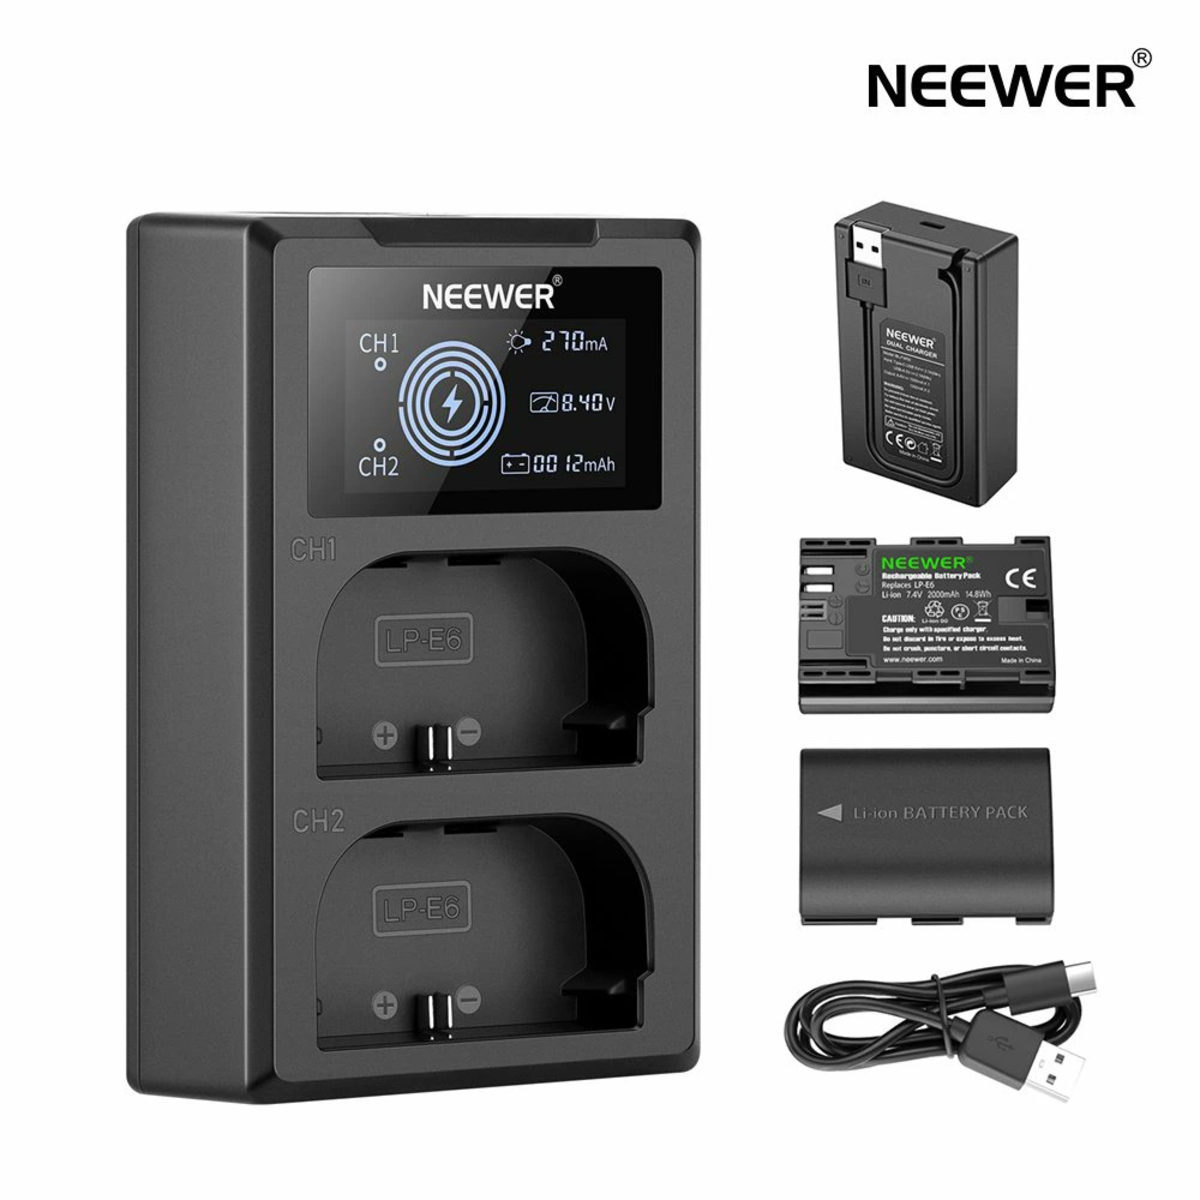 NEEWER 交換用LP-E6バッテリー充電器セット